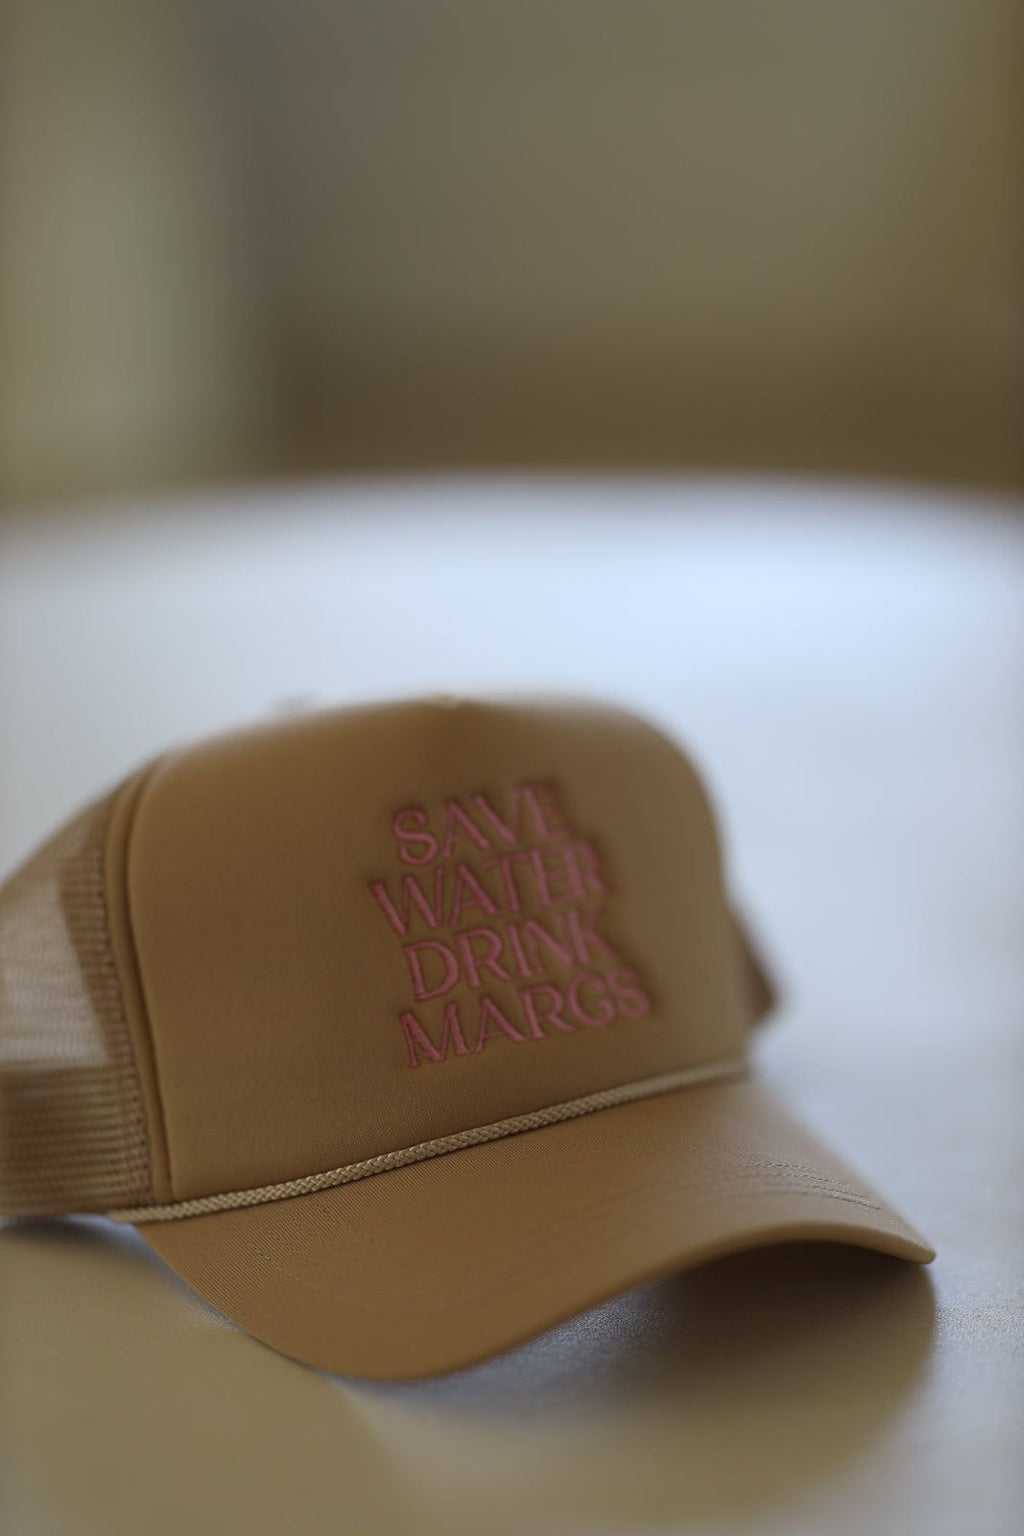 HAZEL & OLIVE Save Water Drink Margs Embroidered Trucker Hat - Beige